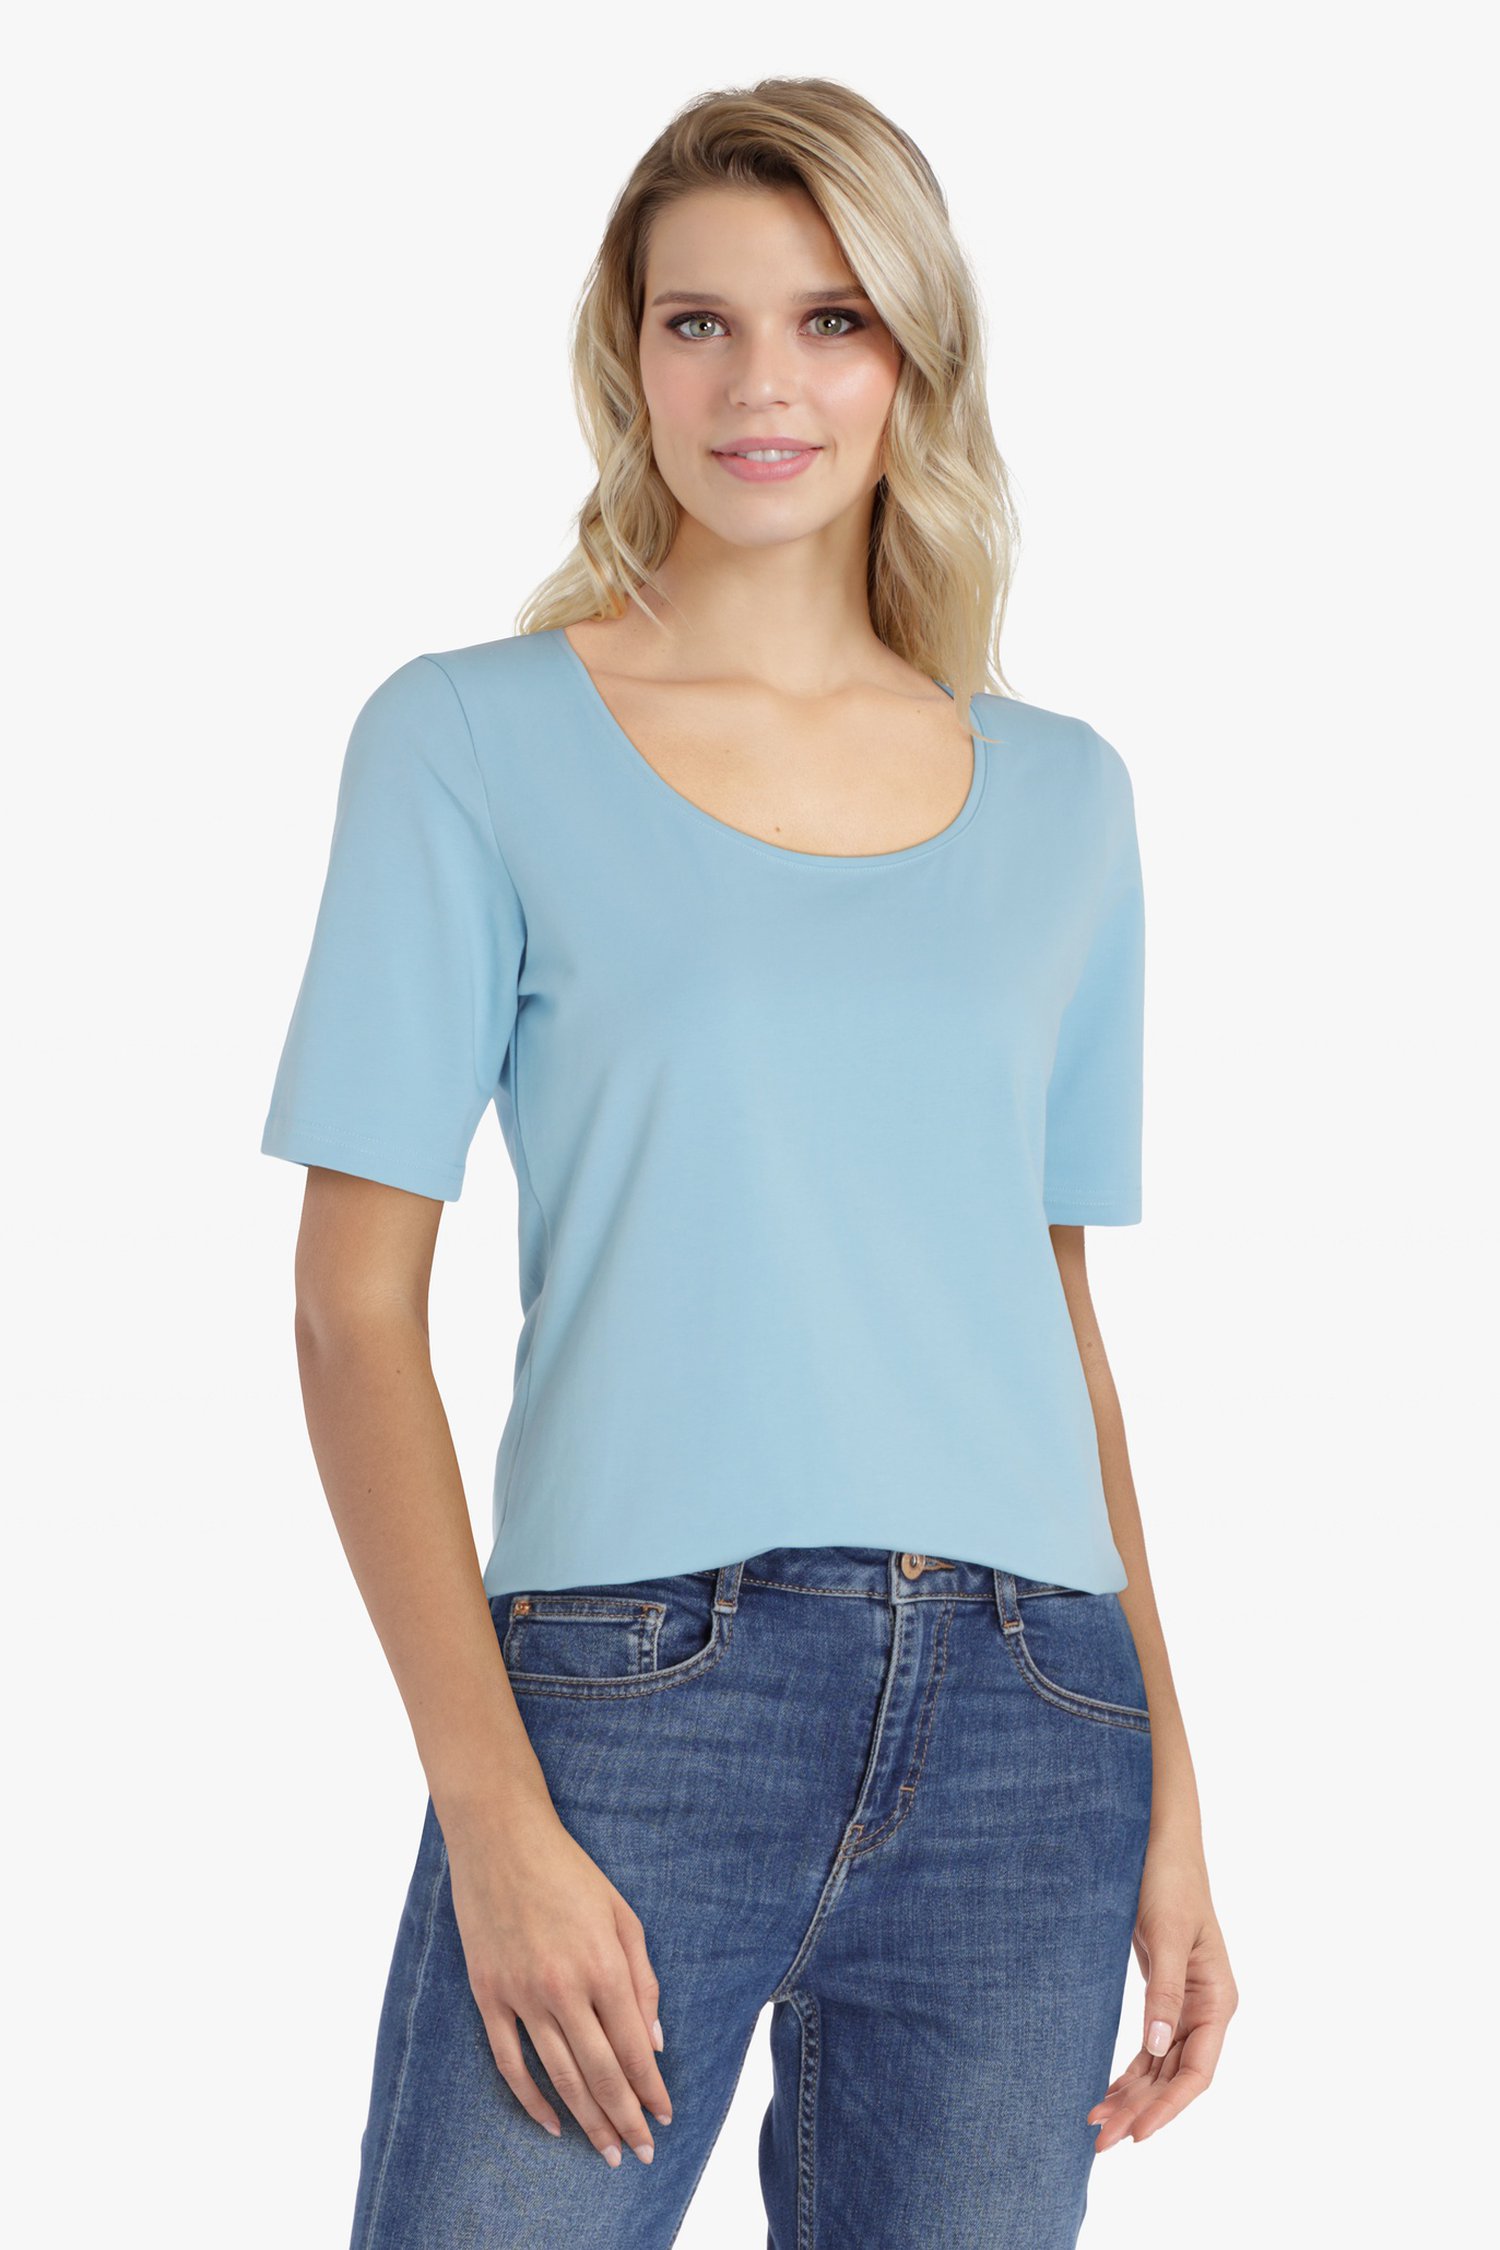 T-shirt bleu clair de Liberty Island pour Femmes